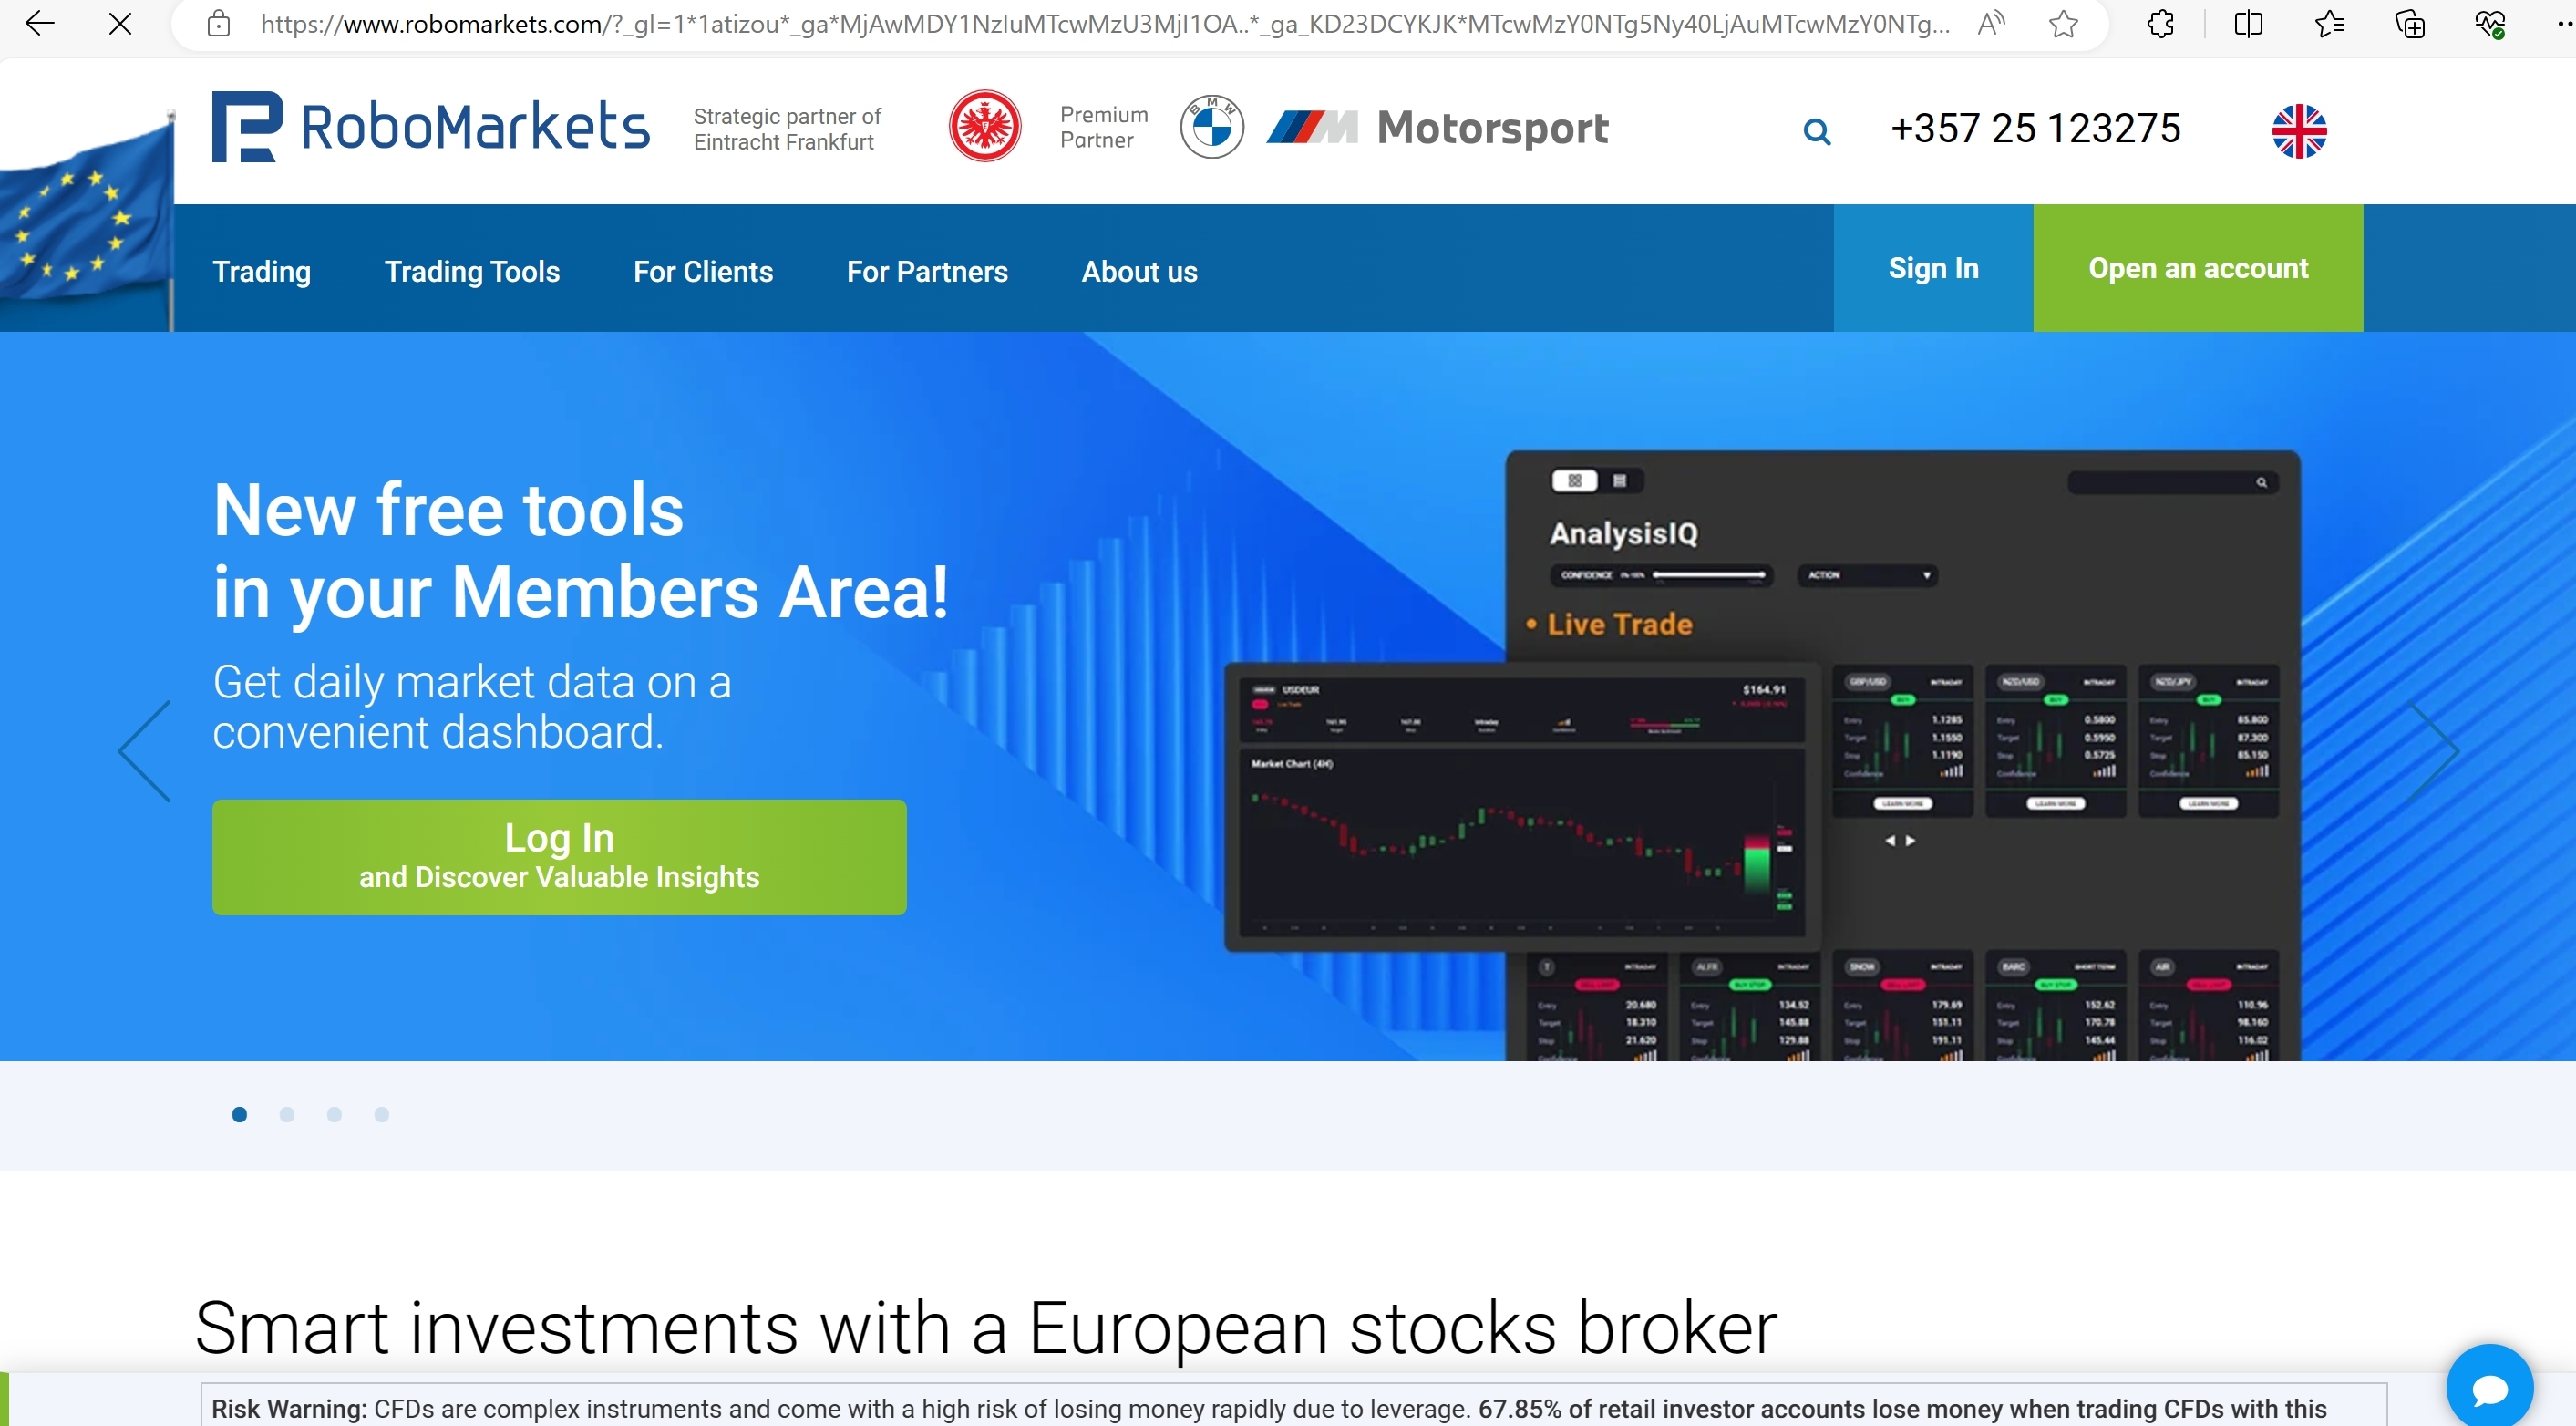 RoboMarkets' homepage